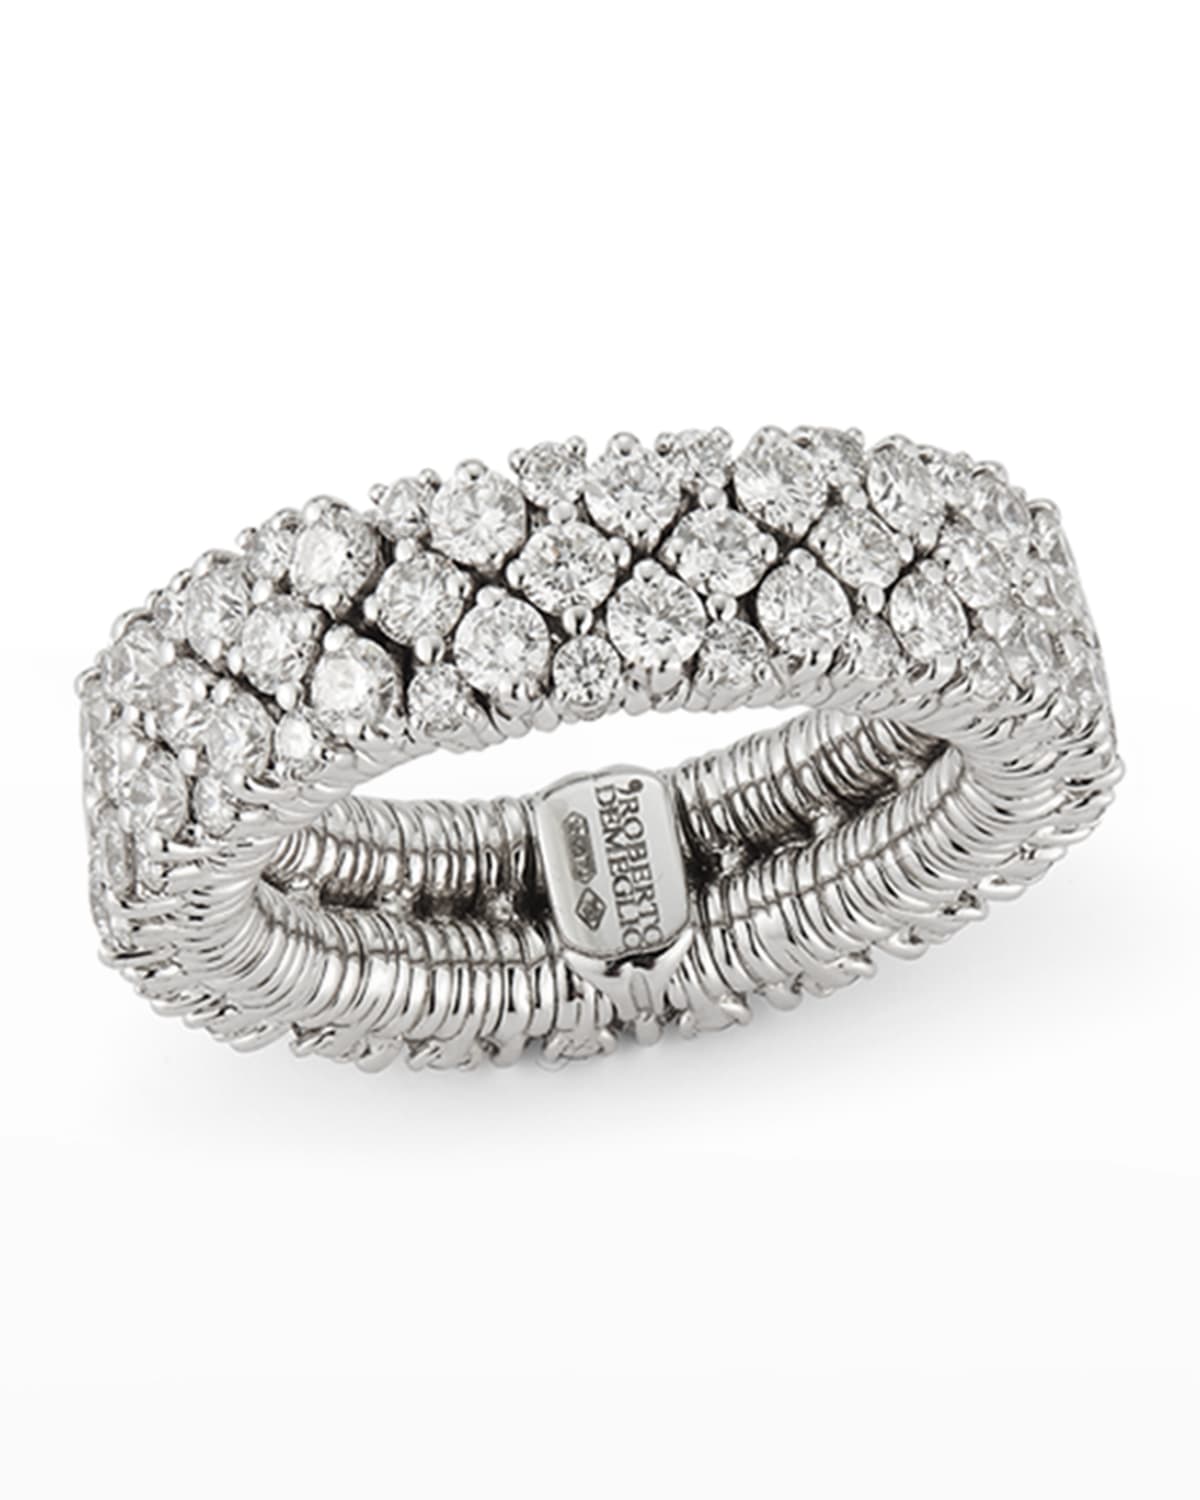 CASHMERE 18k White Gold Diamond Stretch Ring, Size 6.5